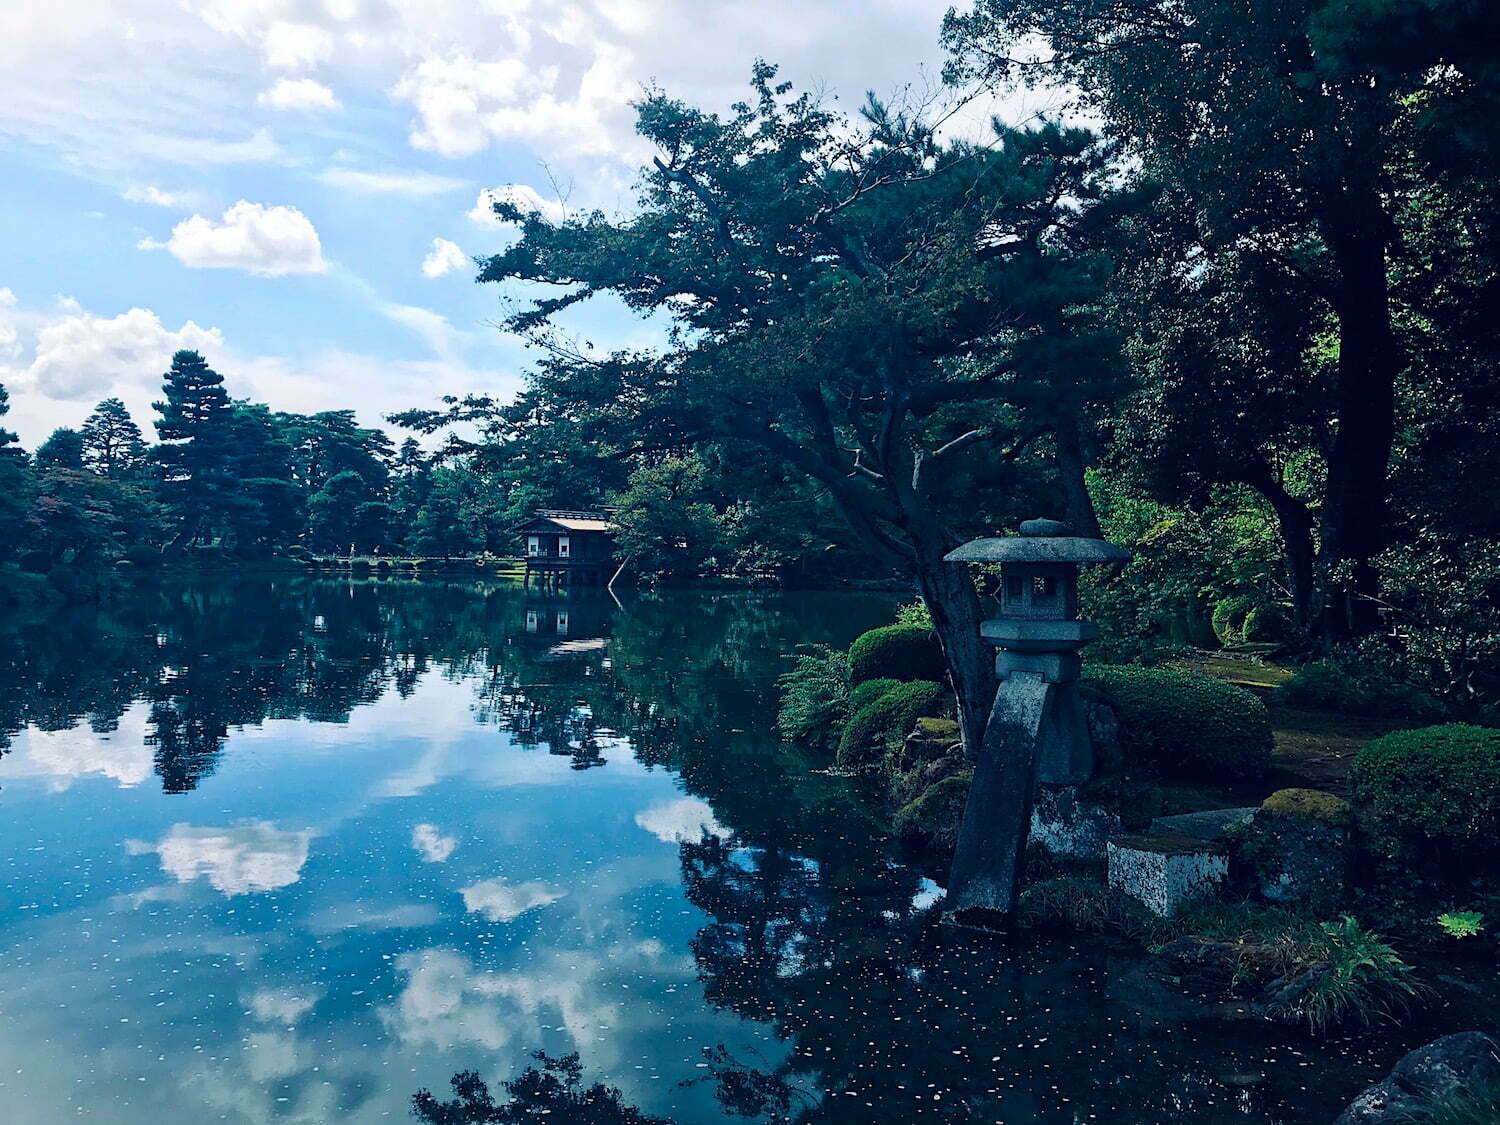 Kenrokuen famous garden in Kanazawa